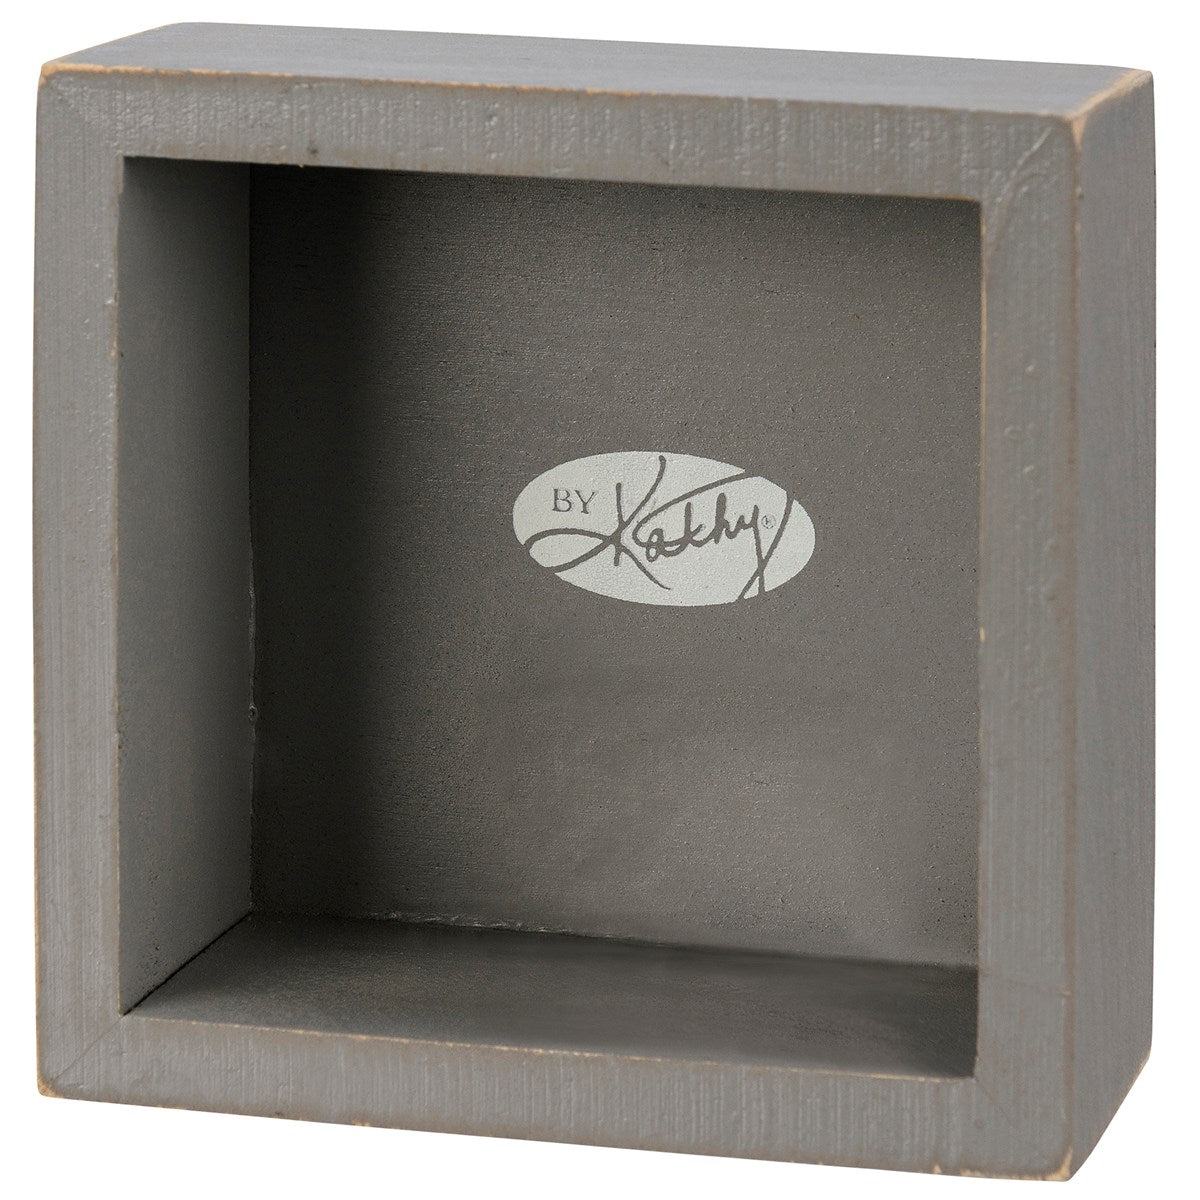 Stay Humble Gray Box Sign Set | Giftable Home Decor | 4" x 4"